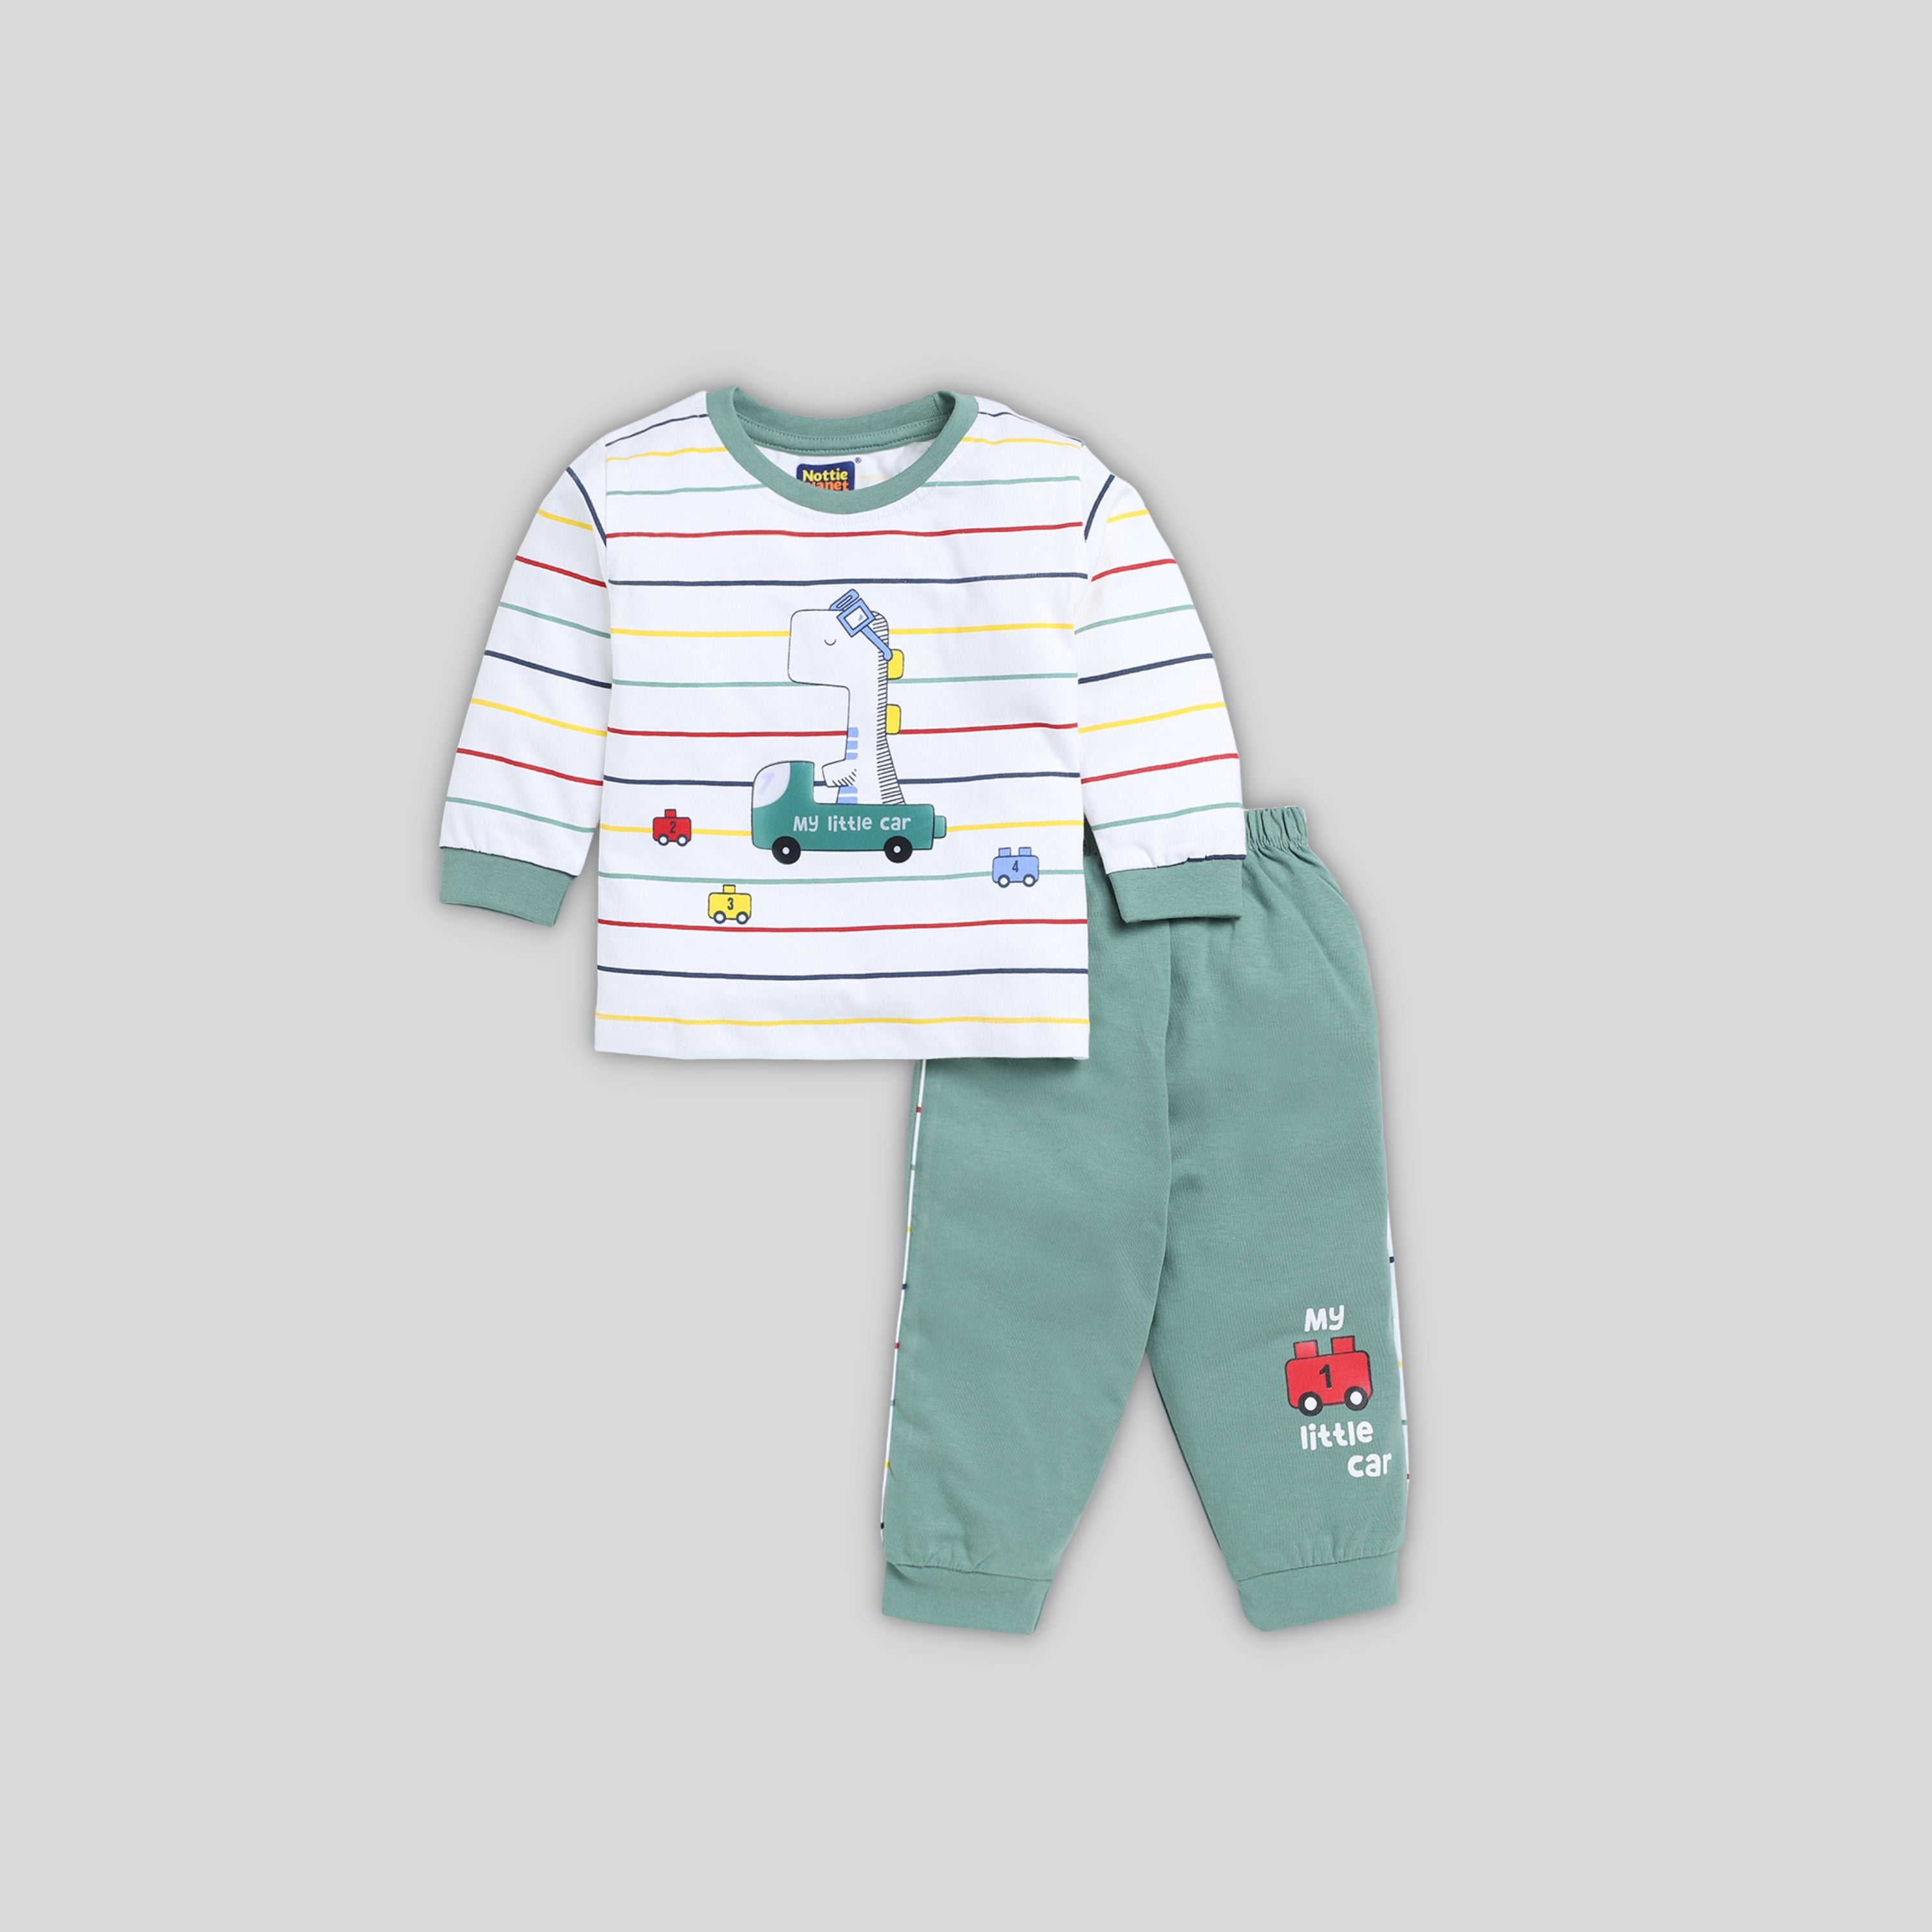 CLOTHING SET FOR BOY - OLIVE GREEN